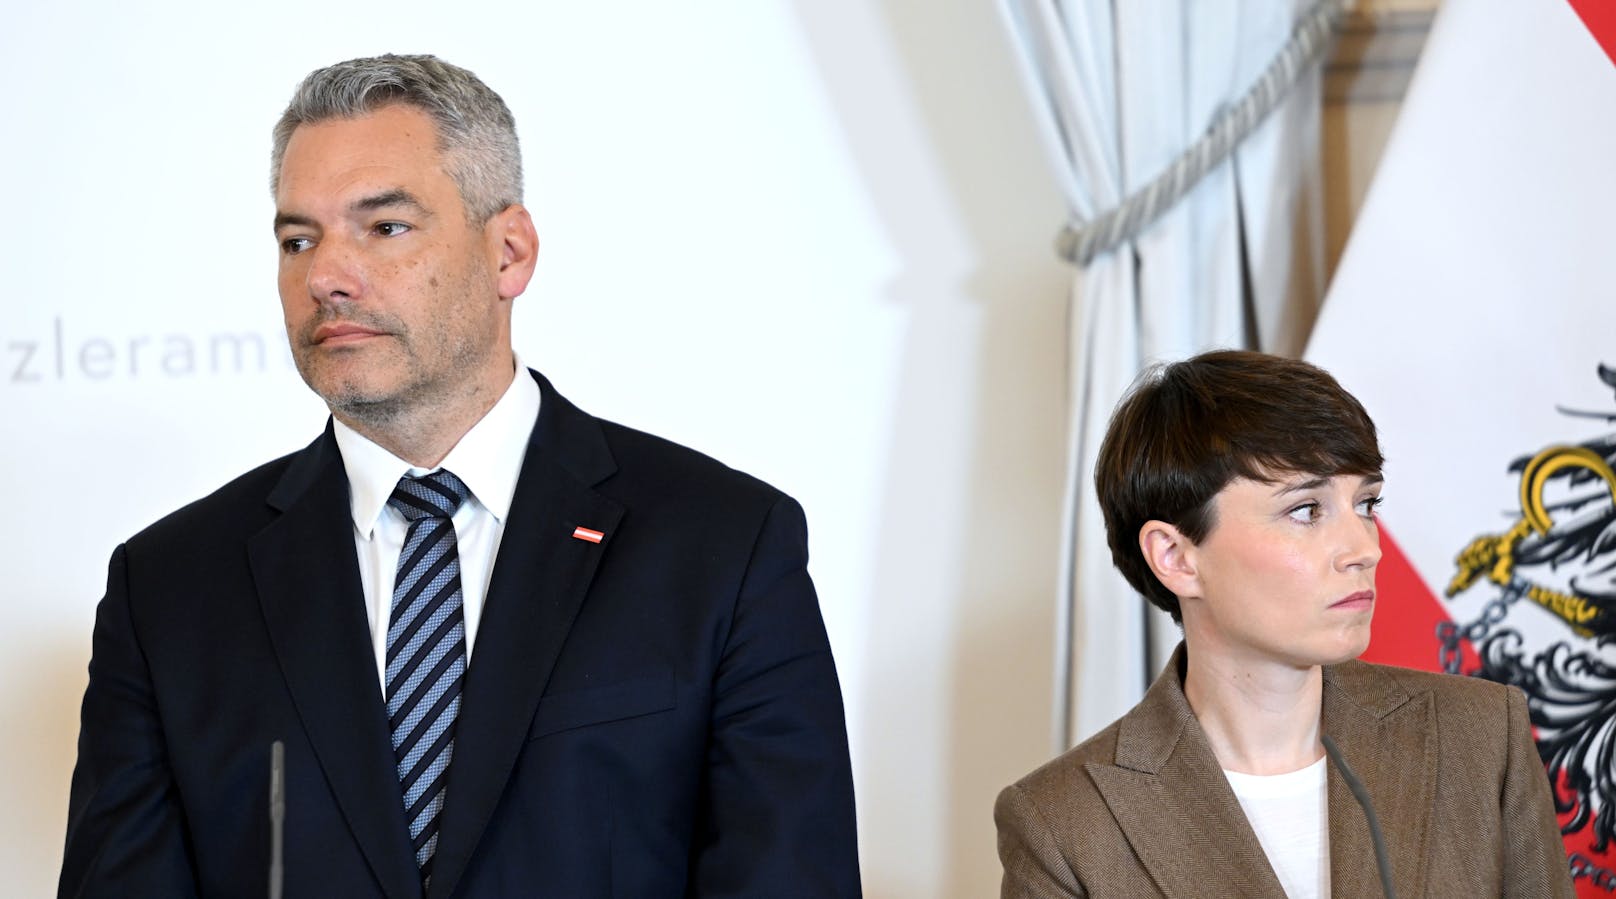 "Falsch" – Grüne gehen auf Koalitionspartner ÖVP los